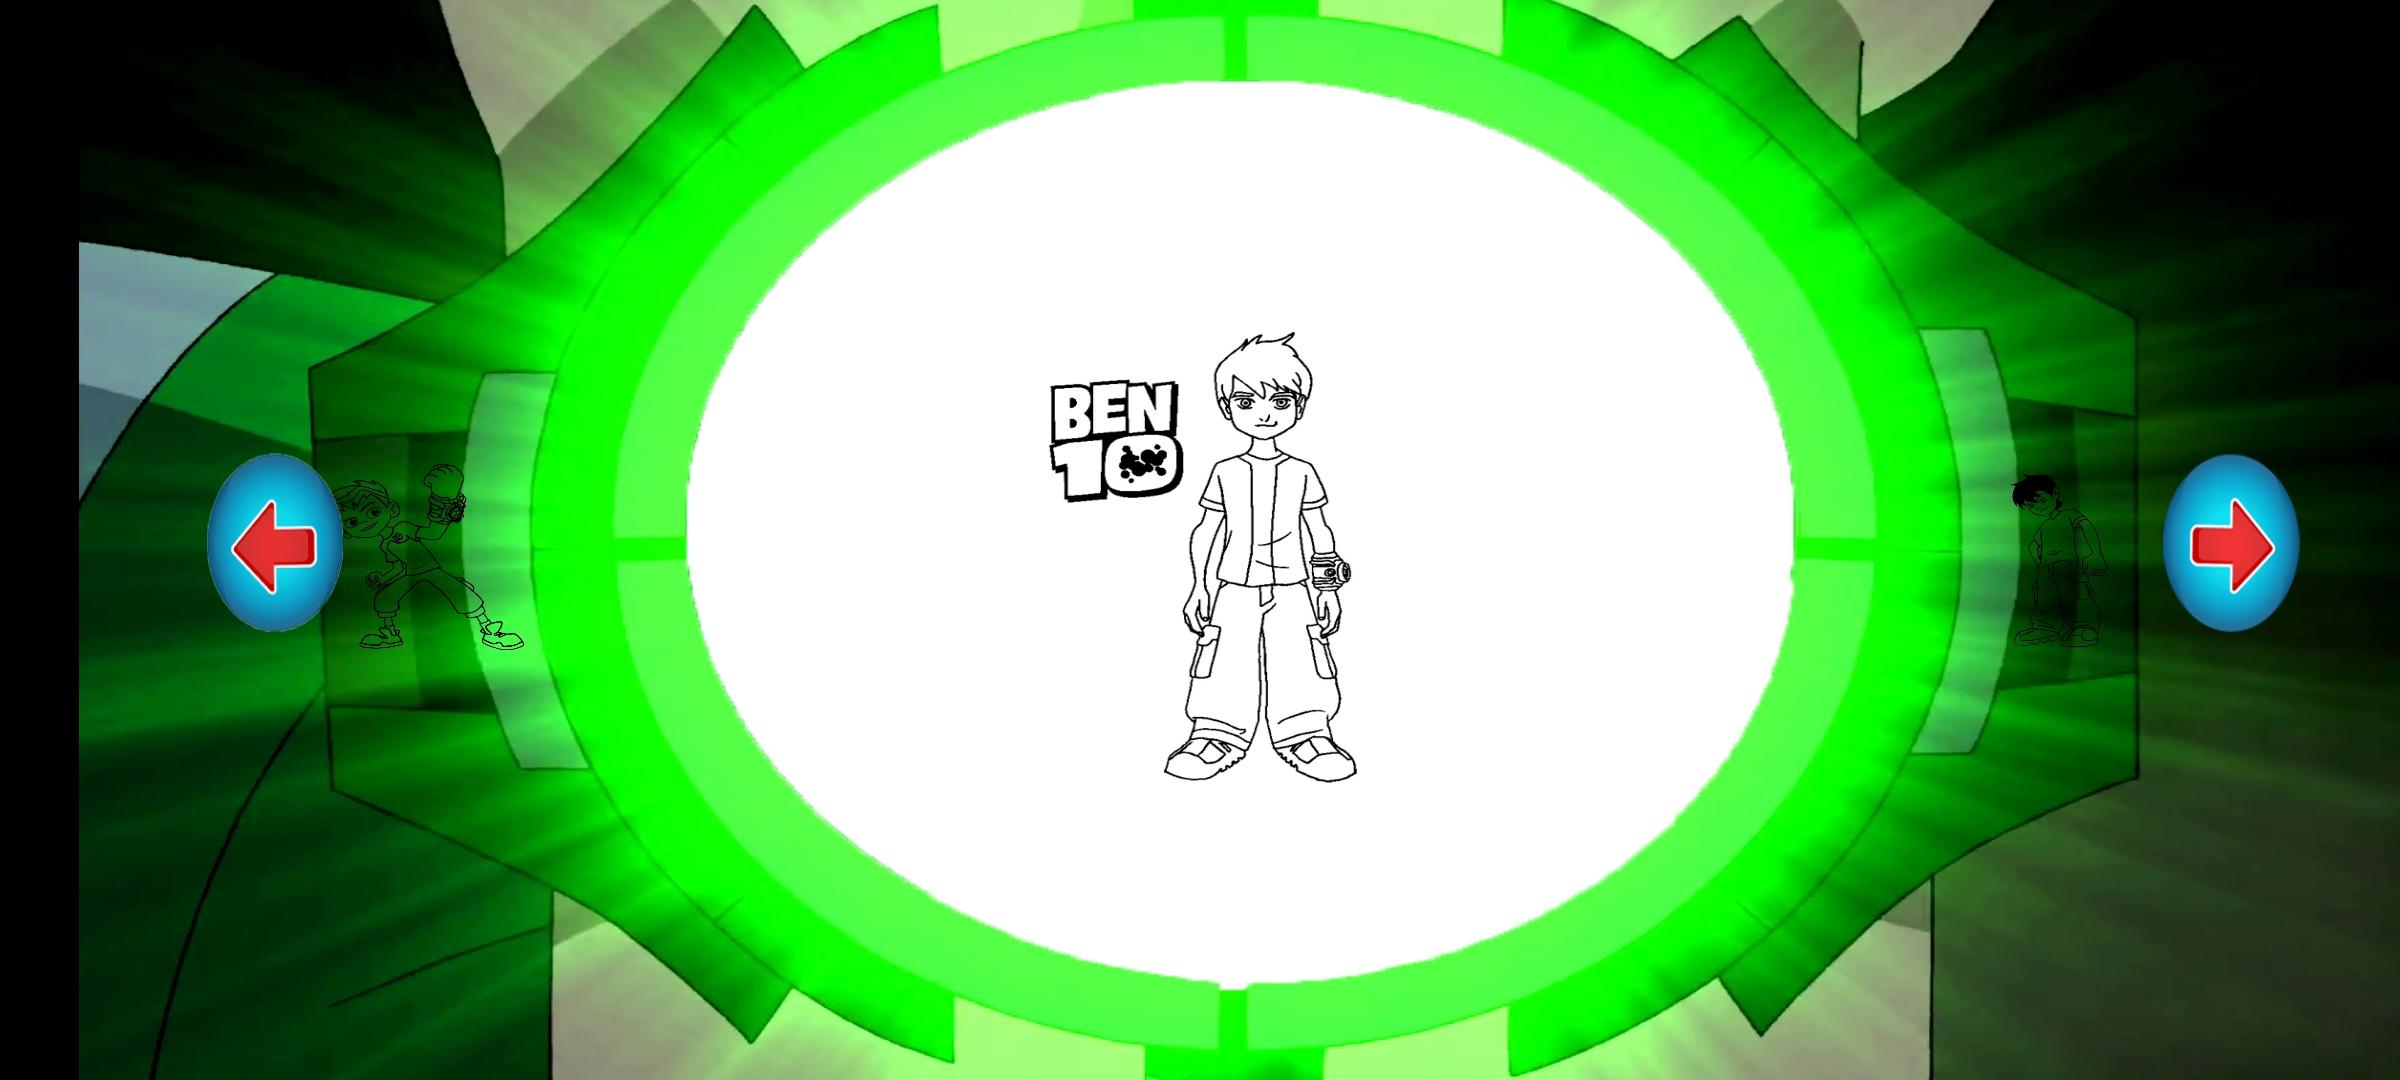 Ben  Coloring 10 heroes ultimate 1.0 Screenshot 2